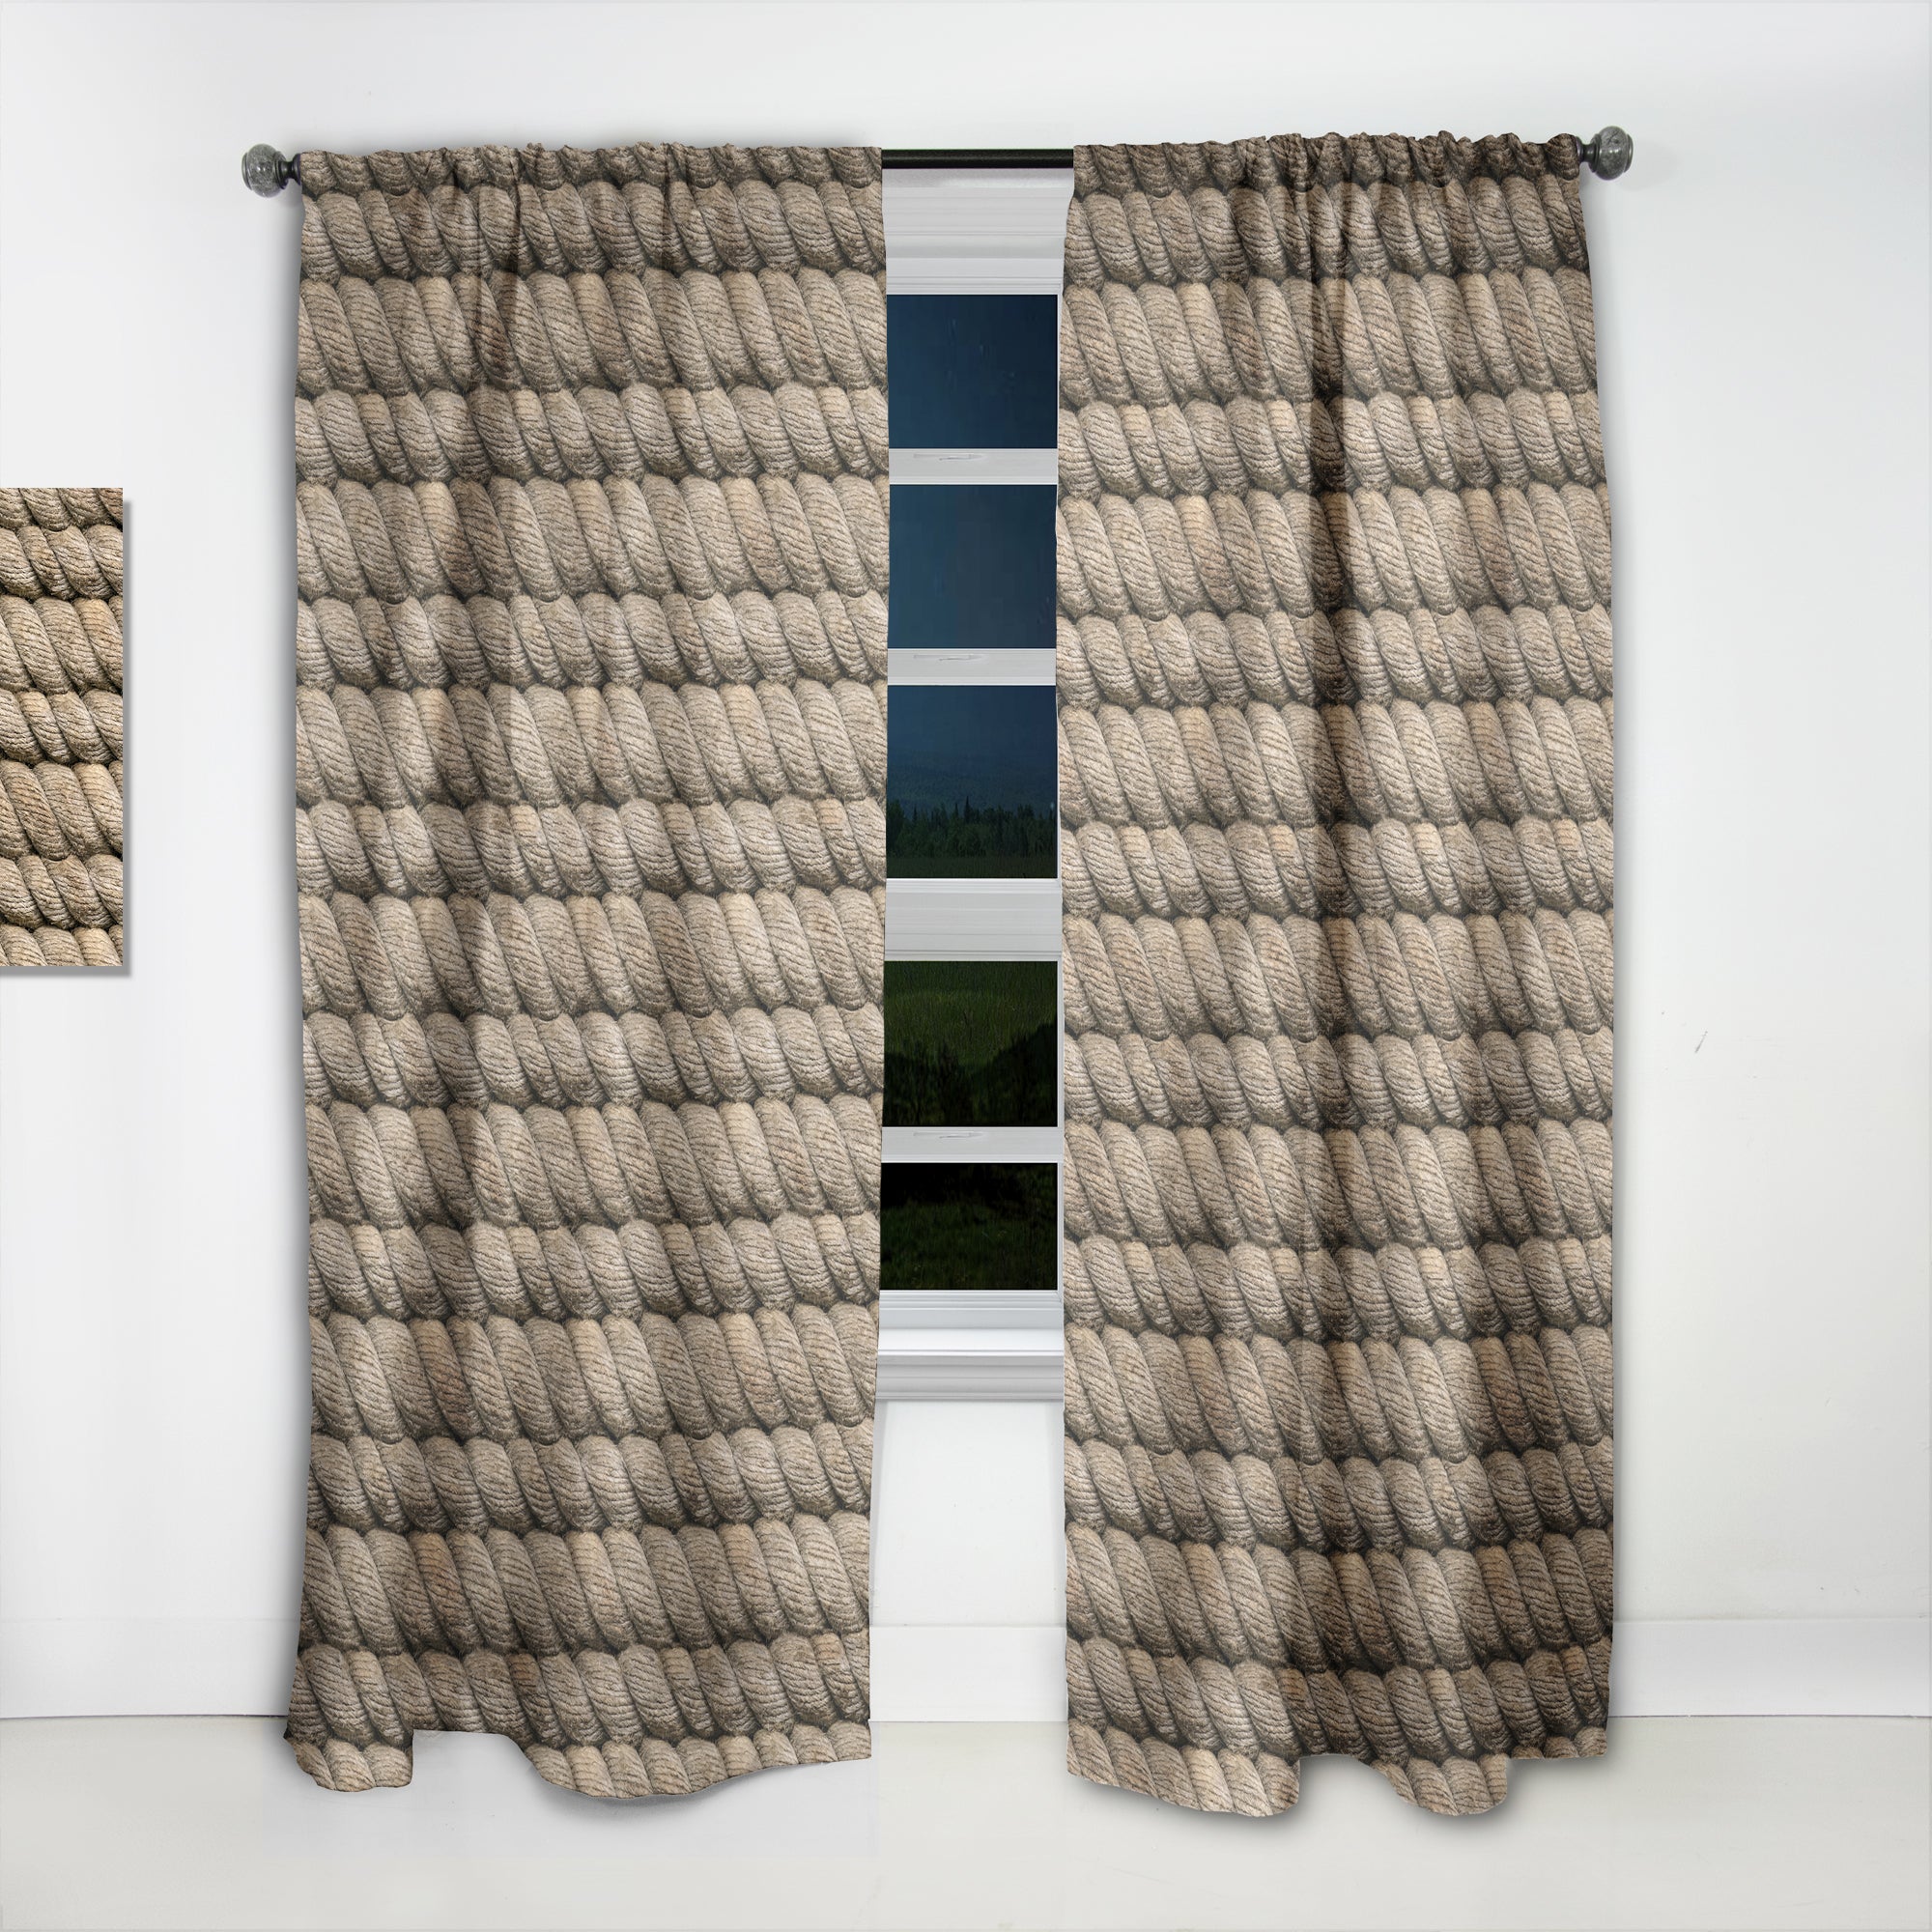 Designart 'Hemp Rope' Farmhouse Curtain Panel